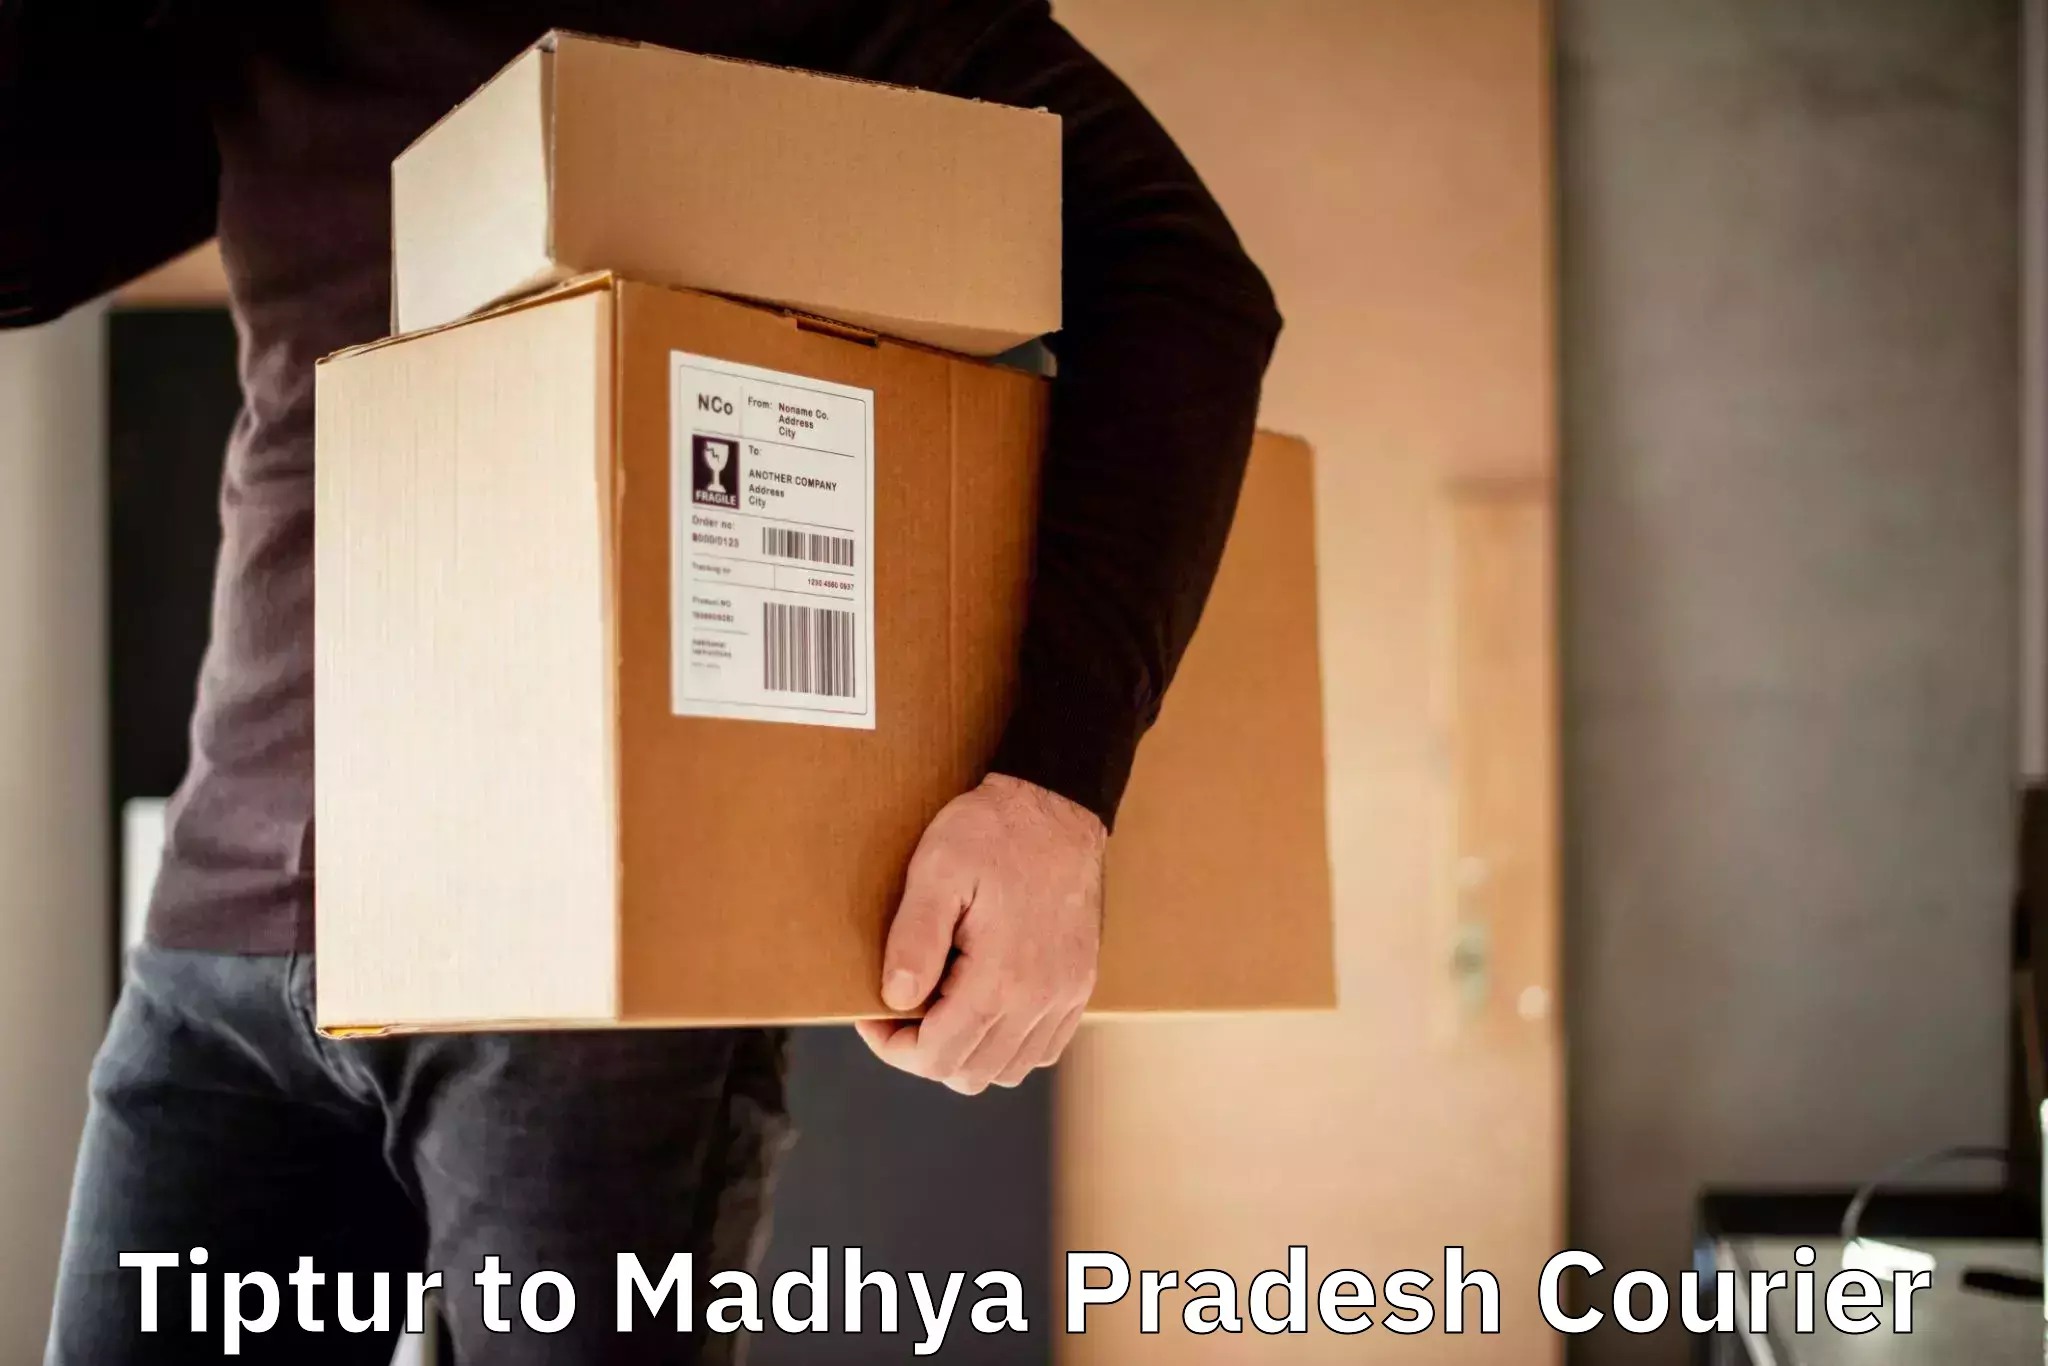 Pharmaceutical courier Tiptur to Chhindwara